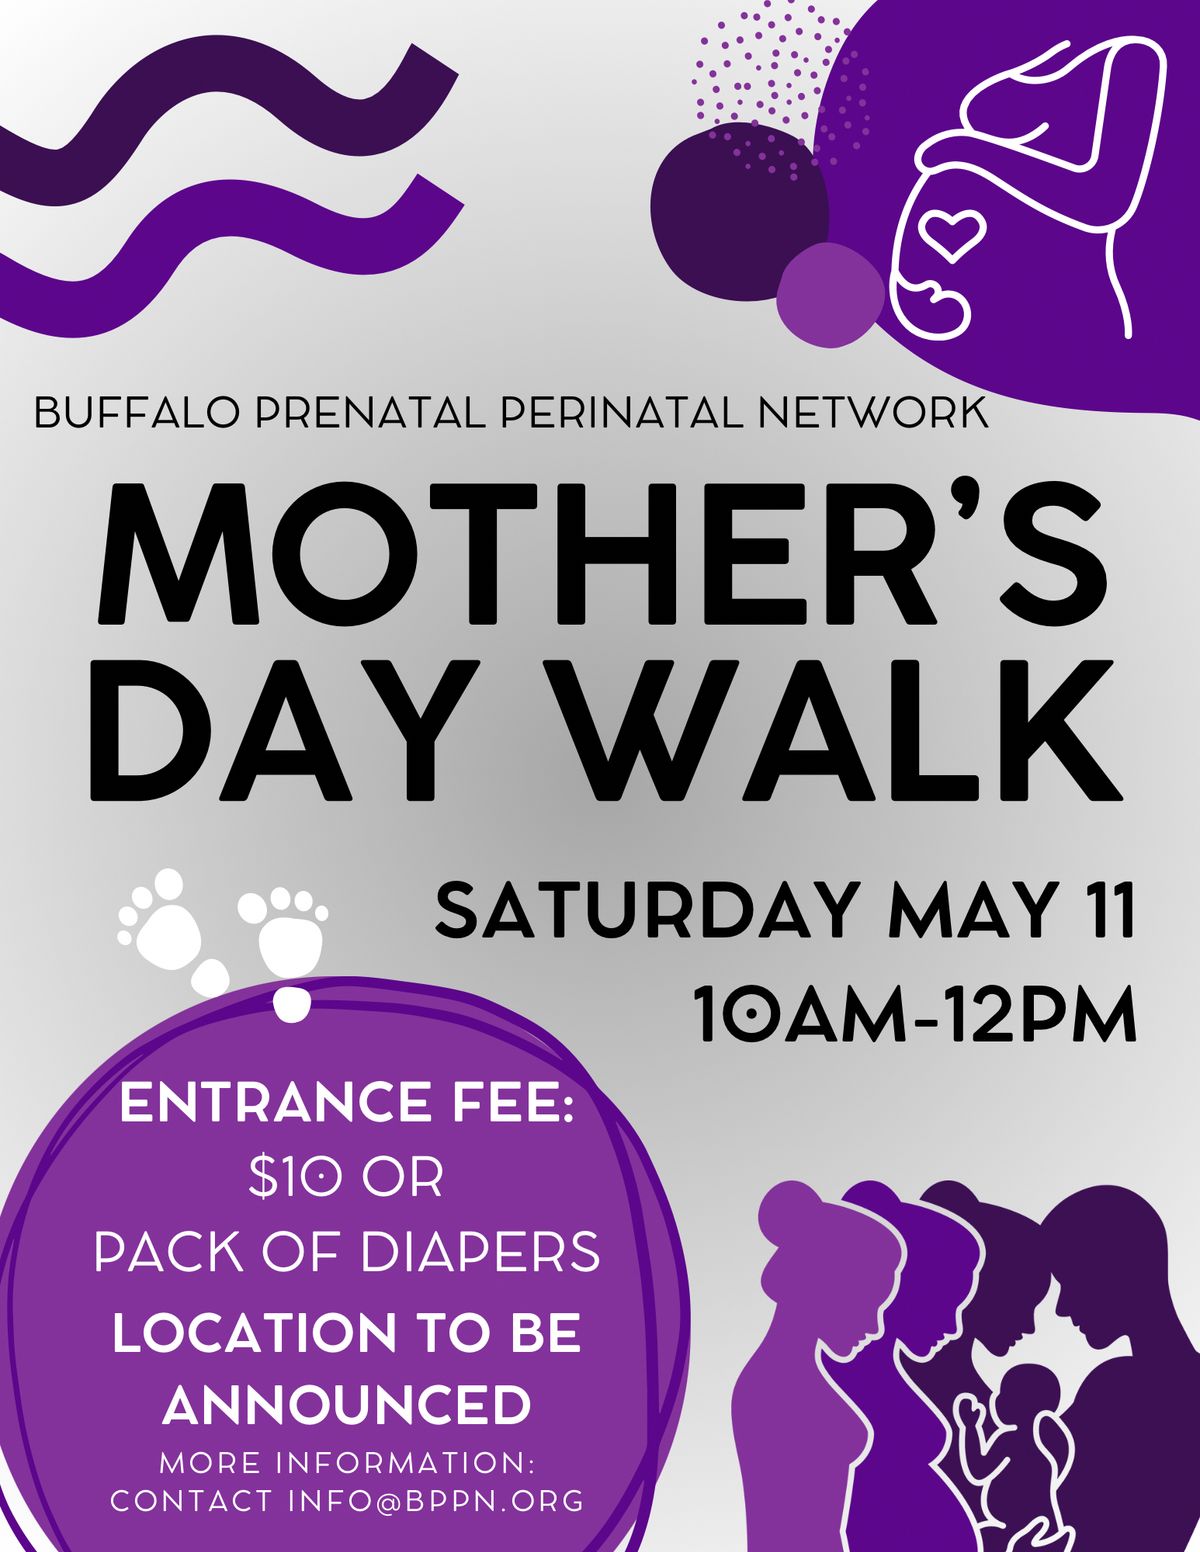 BPPN Mother's Day Walk FUNdraiser